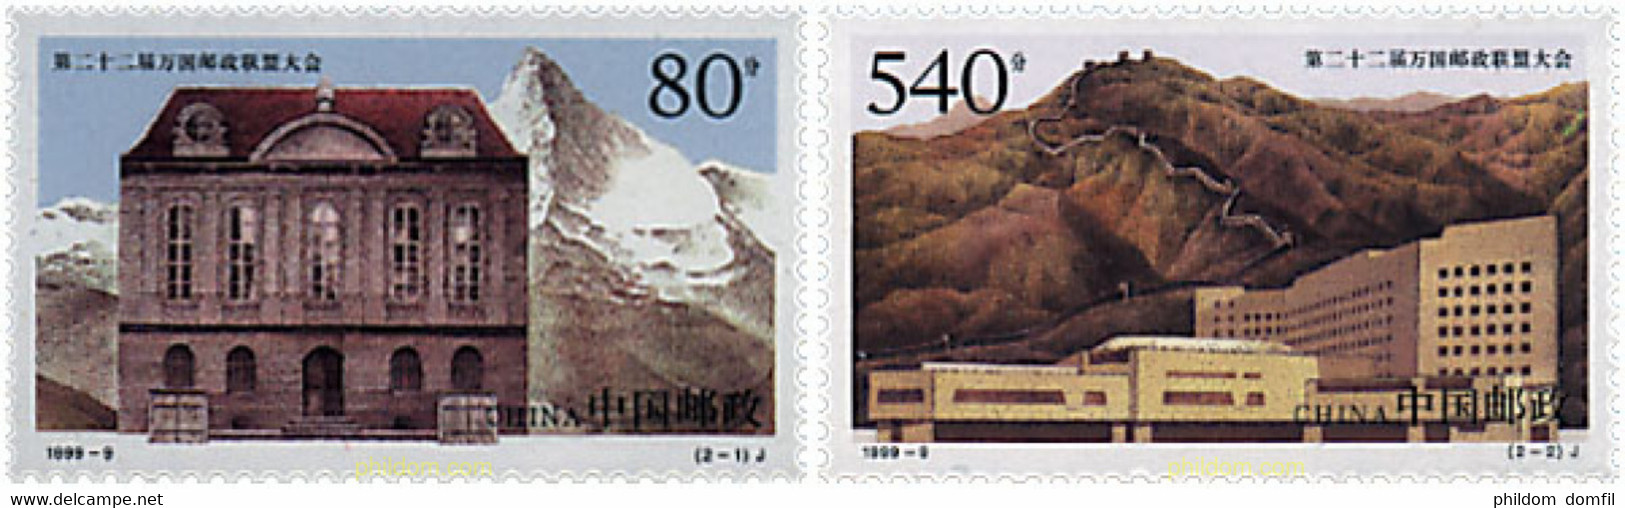 74874 MNH CHINA. República Popular 1999 125 ANIVERSARIO DE LA UPU - Poste Aérienne